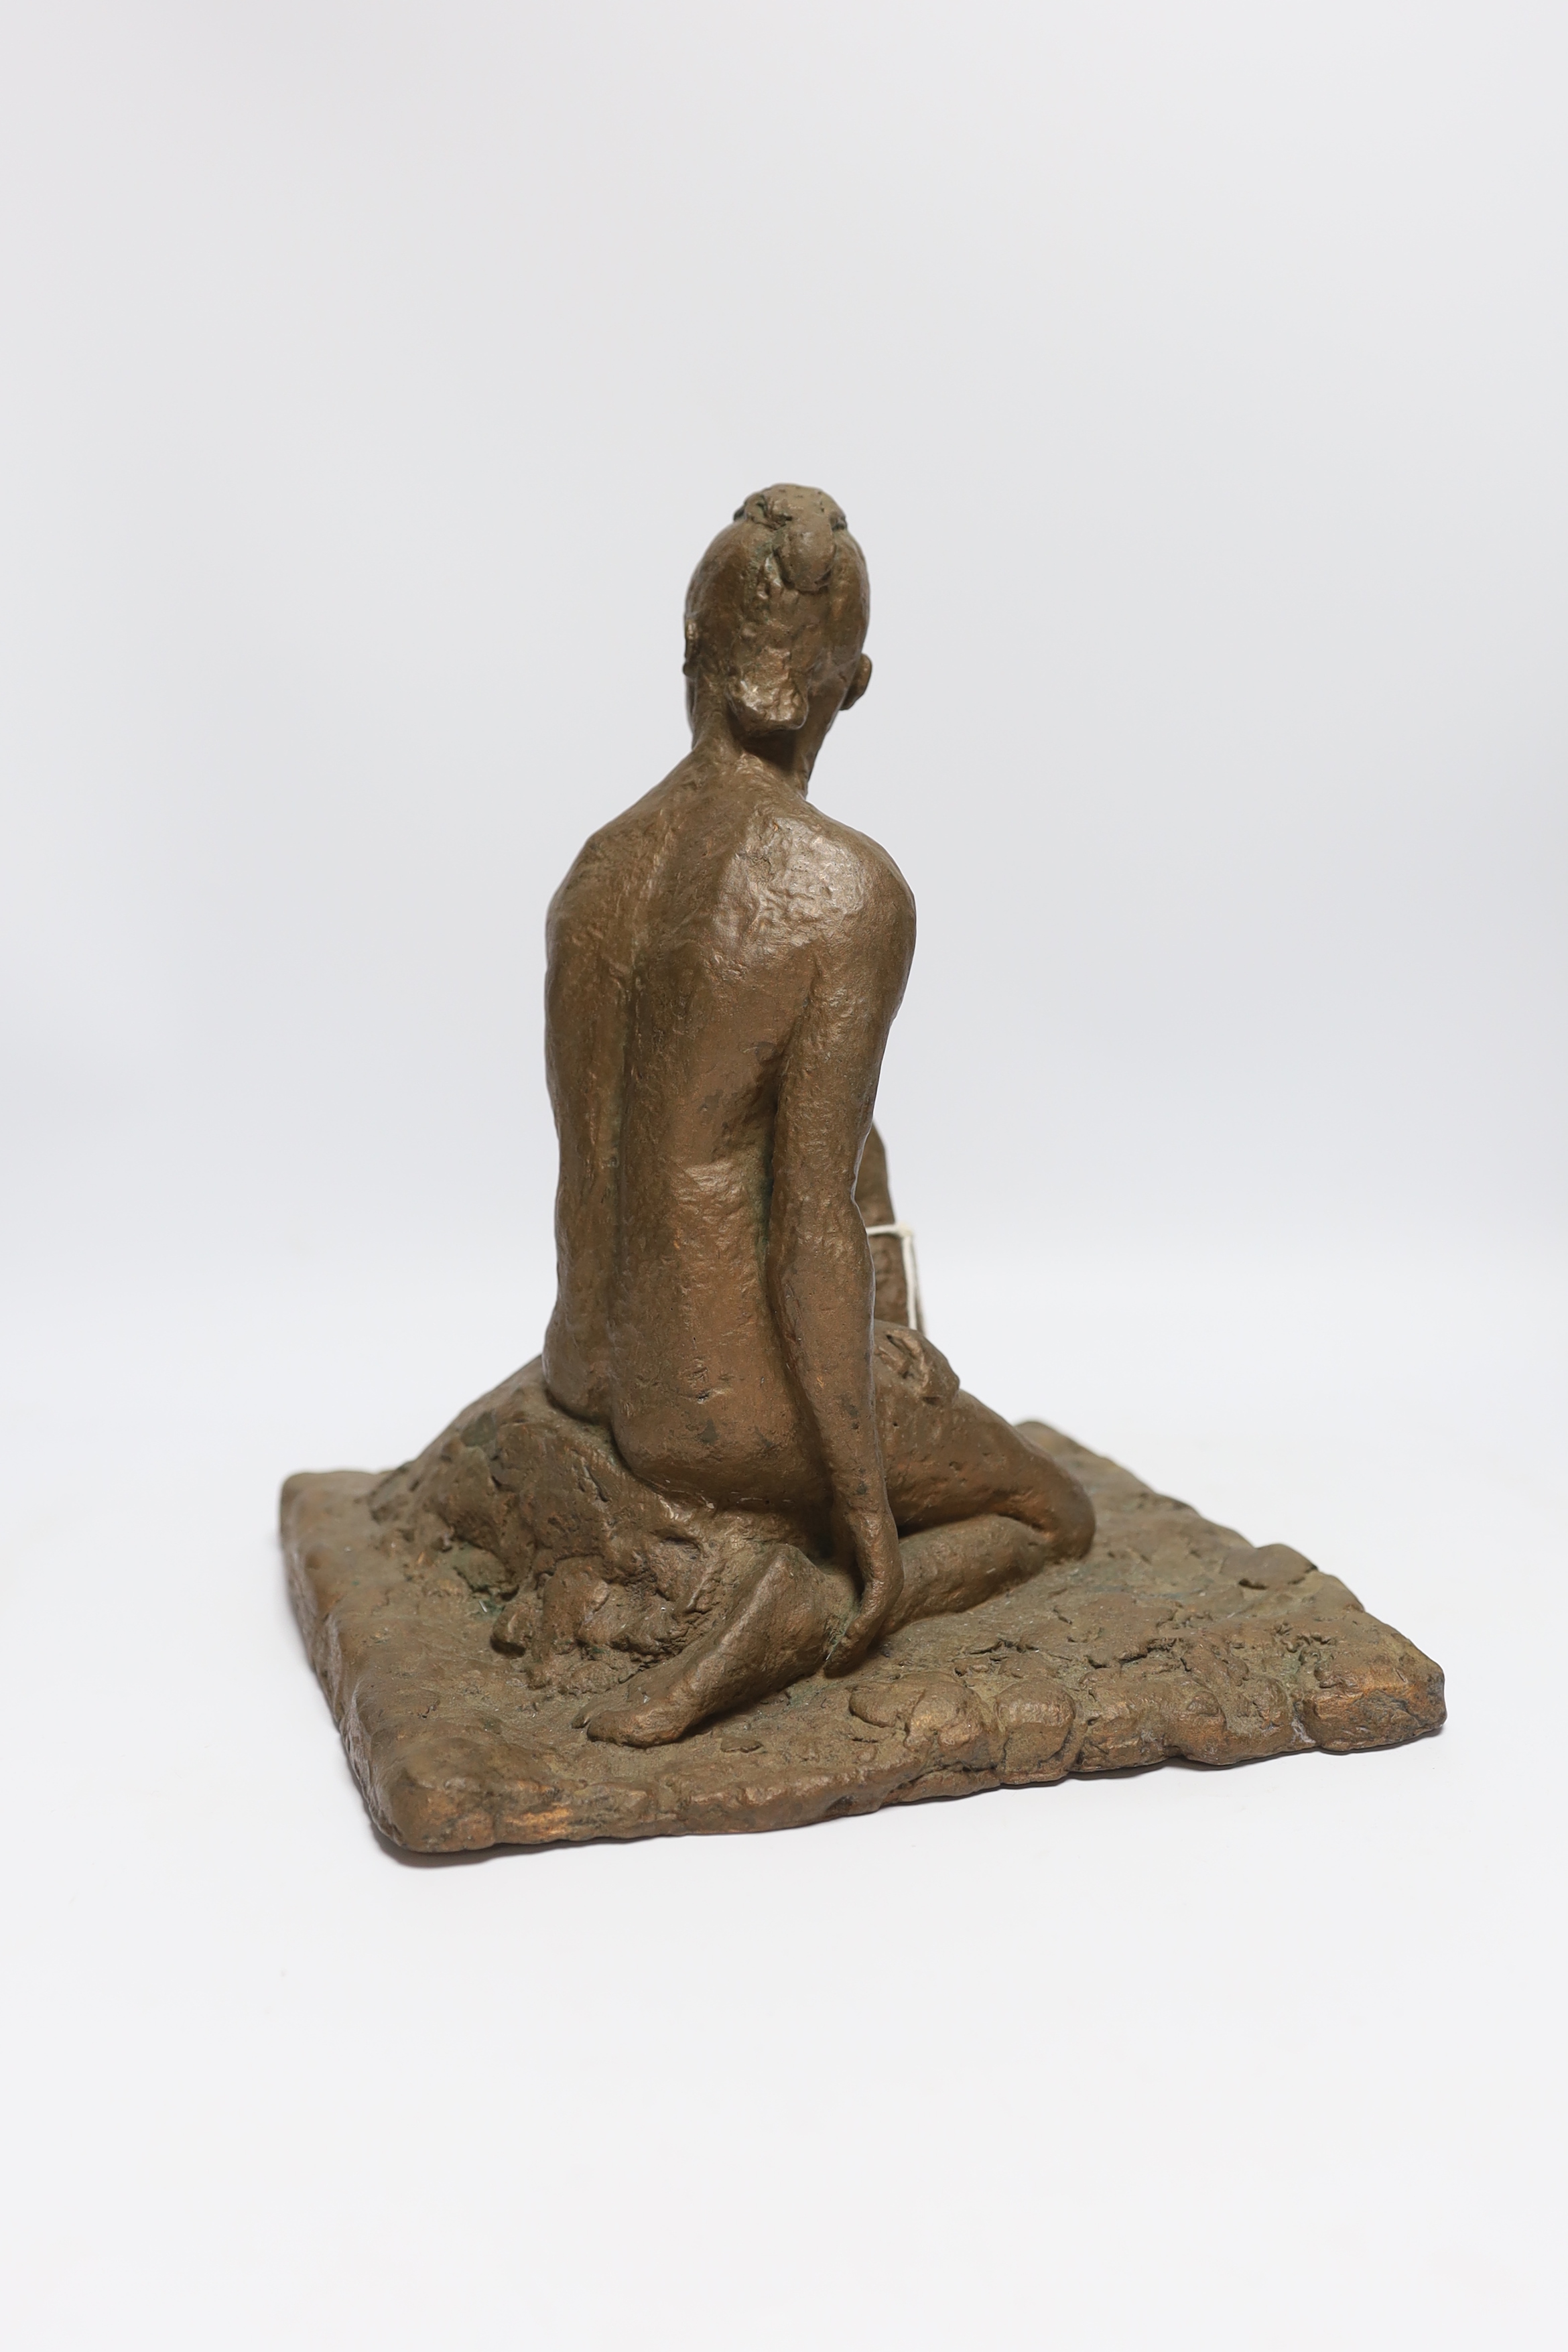 An abstract bronzed resin sculpture of a kneeling man, 30cm